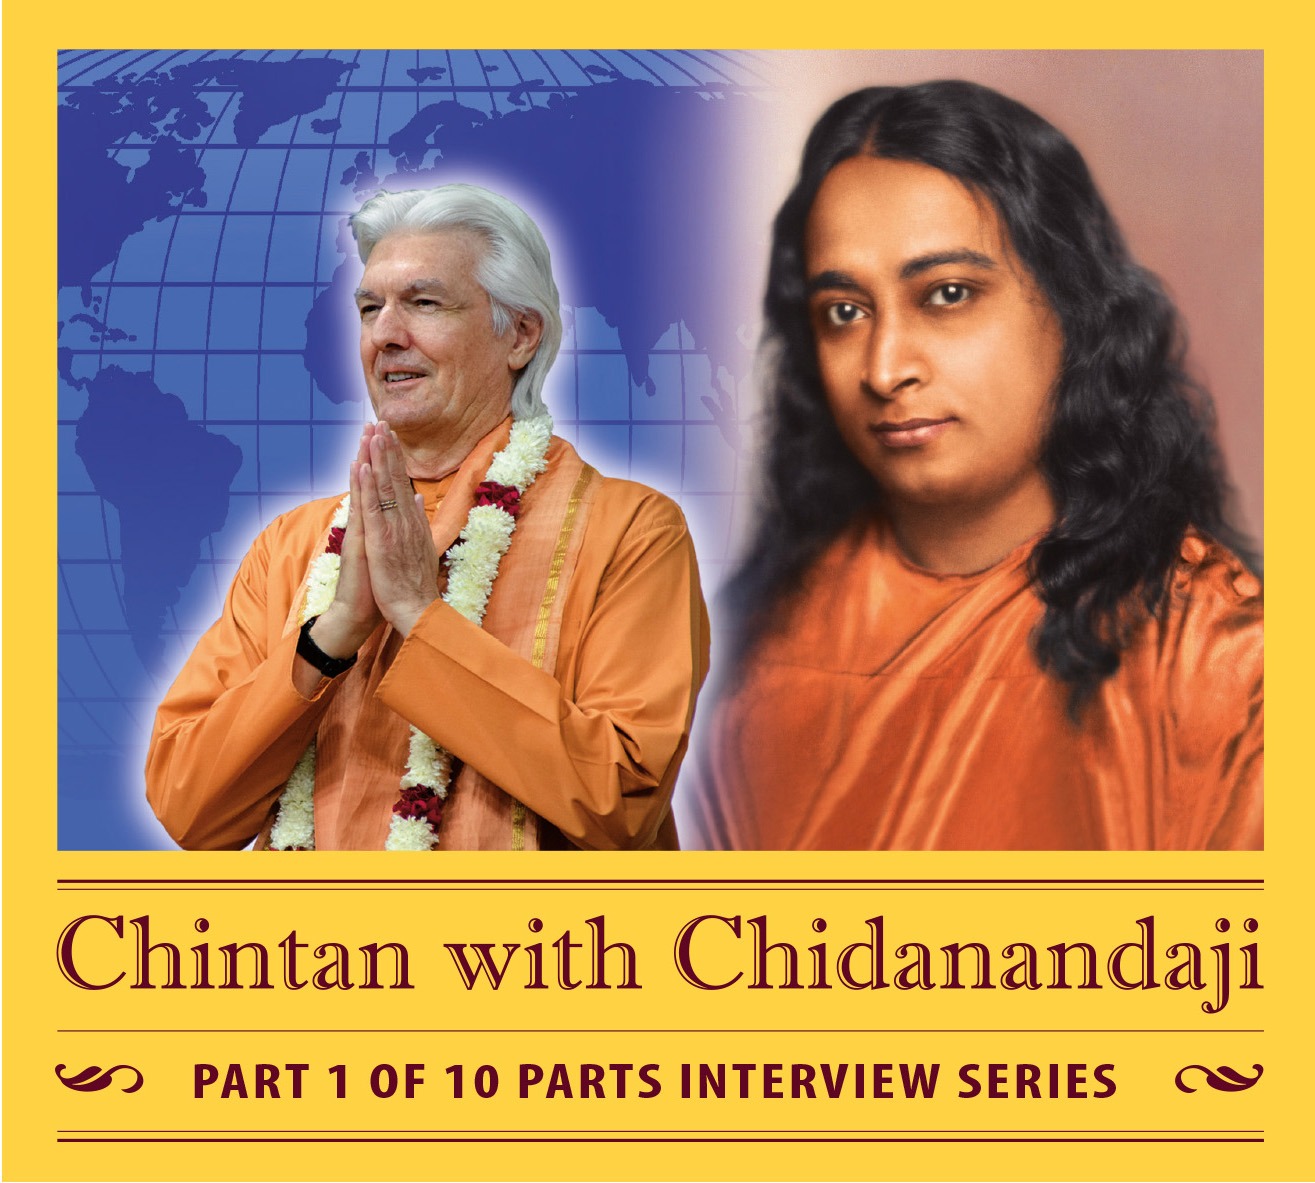 The New Generations will be More Evolved: Swami Chidananda Giri